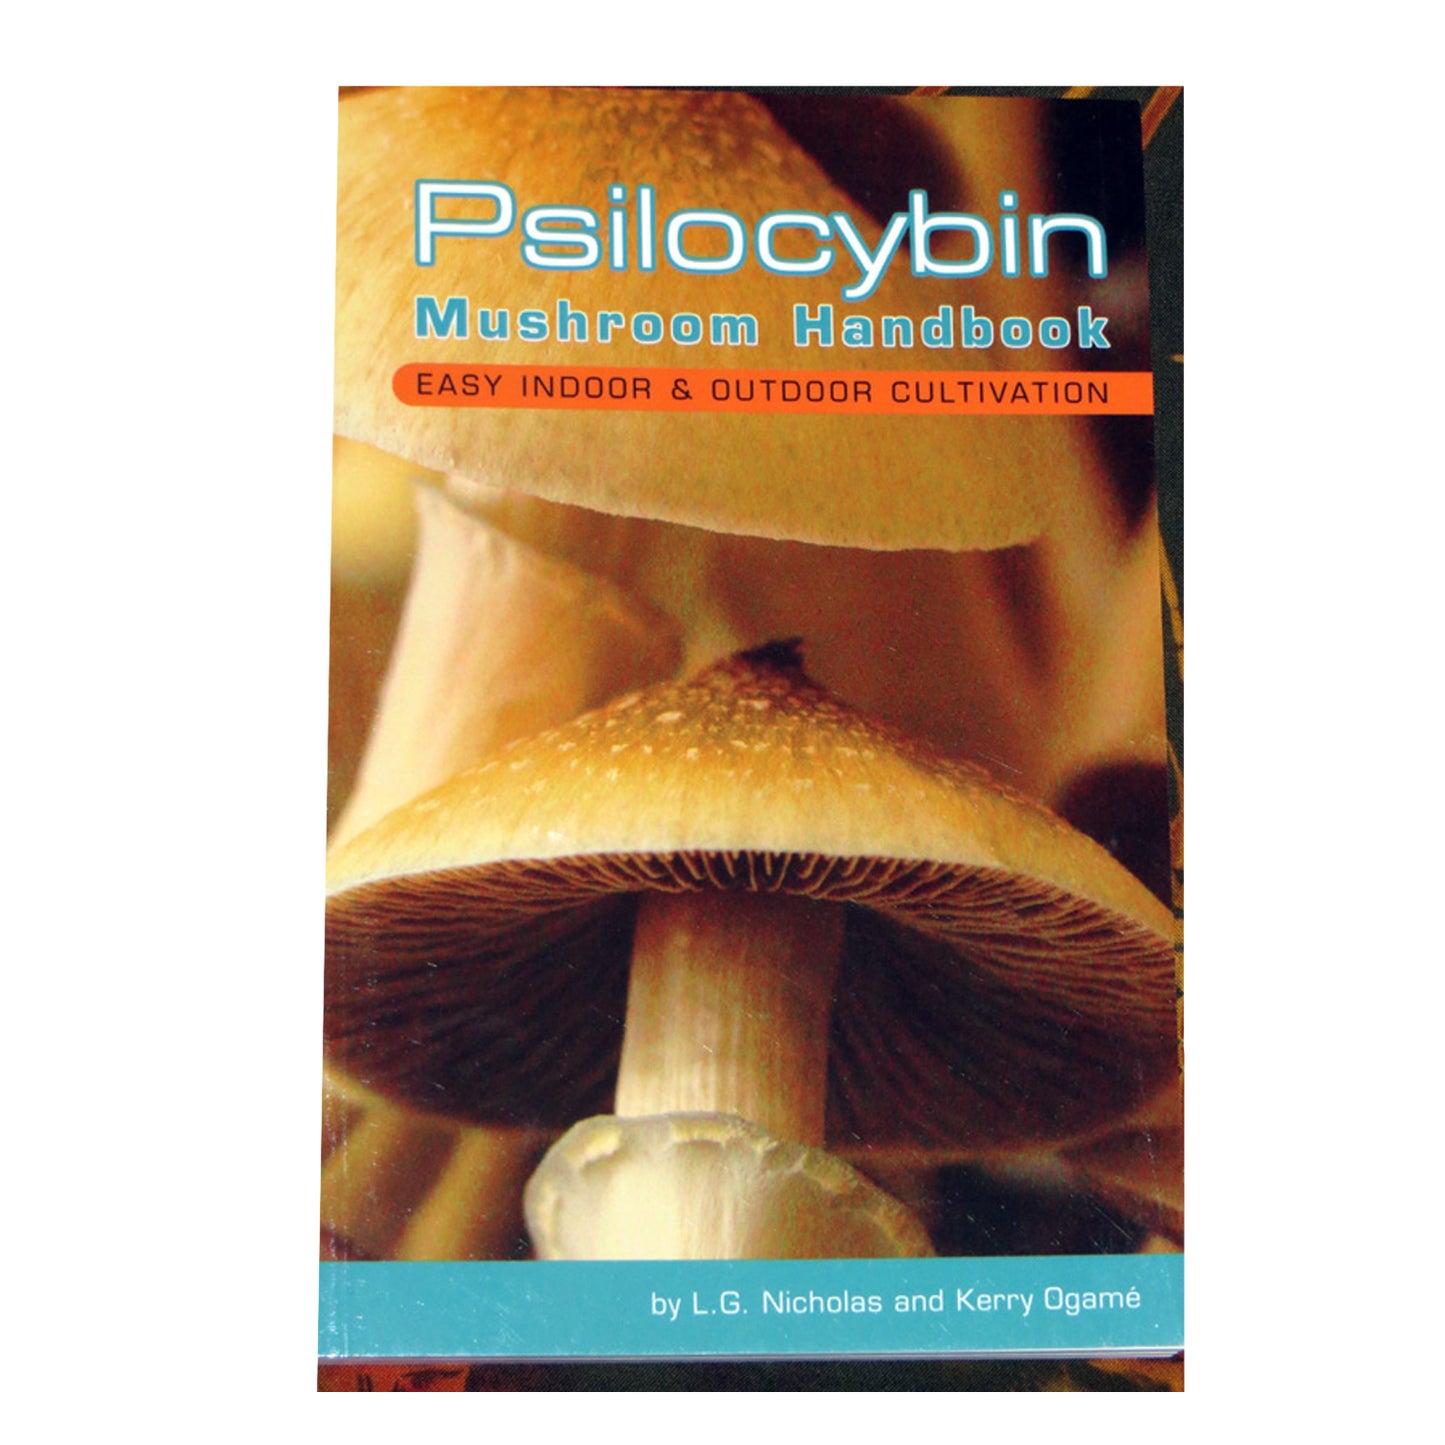 Psilocybin Mushroom Handbook by L.G. Nicholas and Kerry Ogame